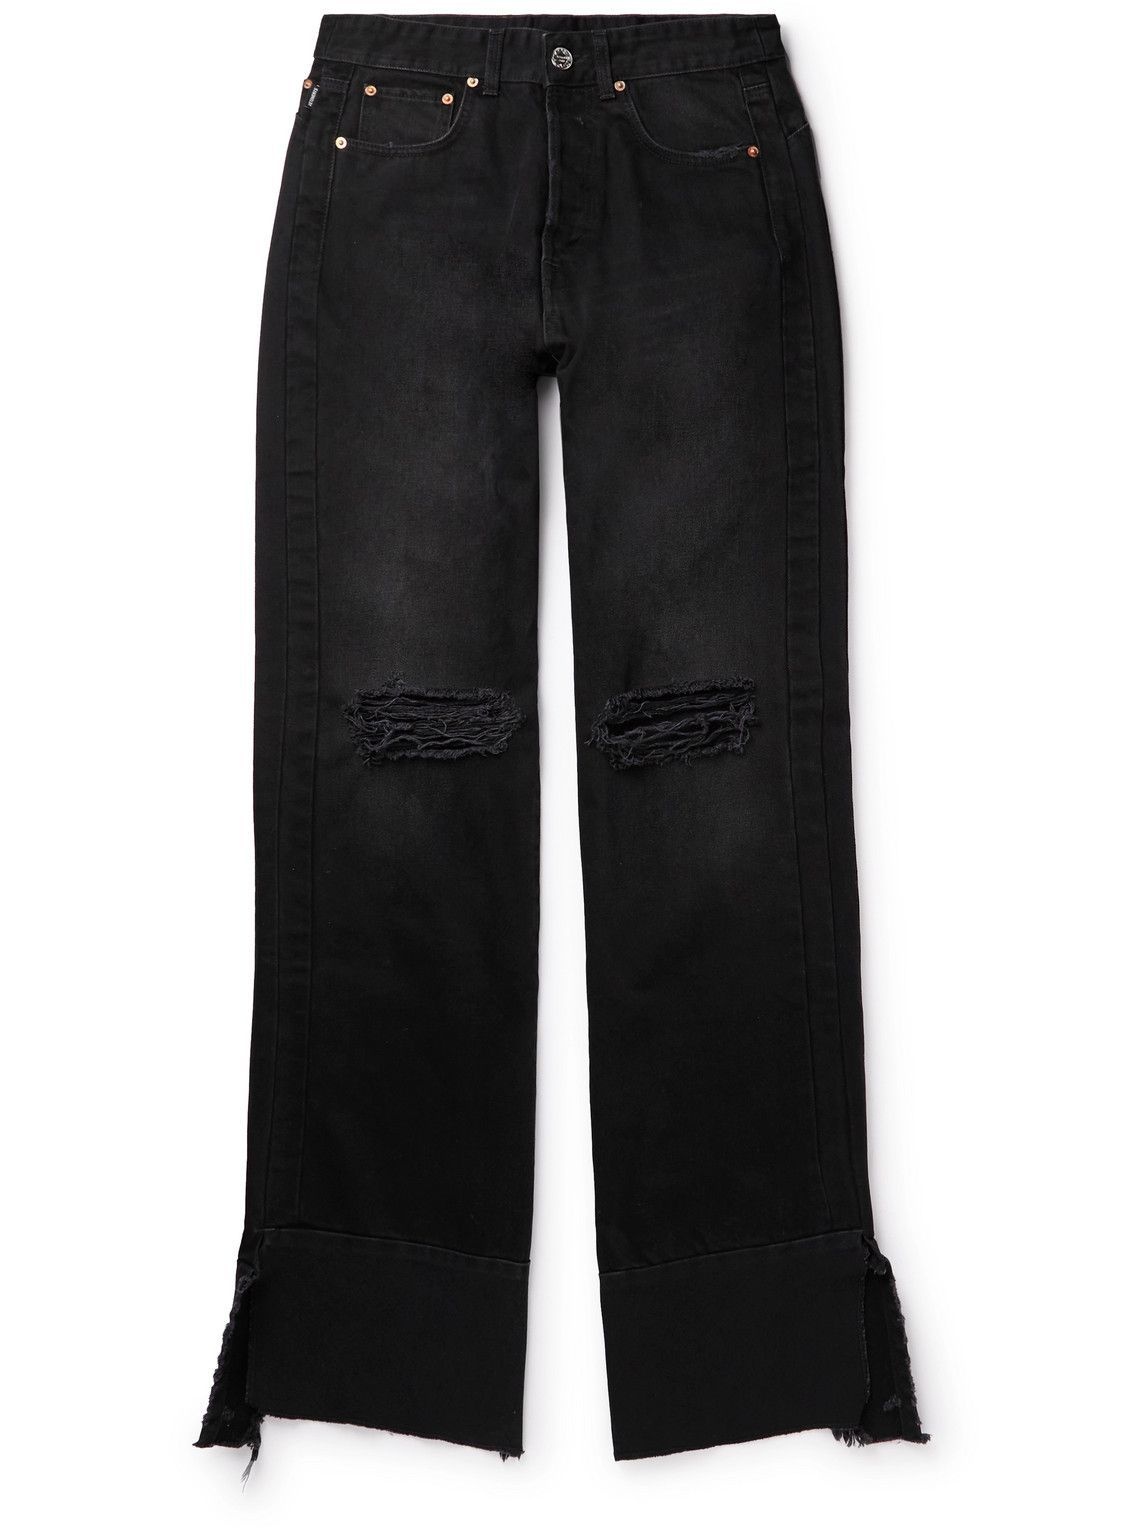 VETEMENTS  Distressed Black Jeans